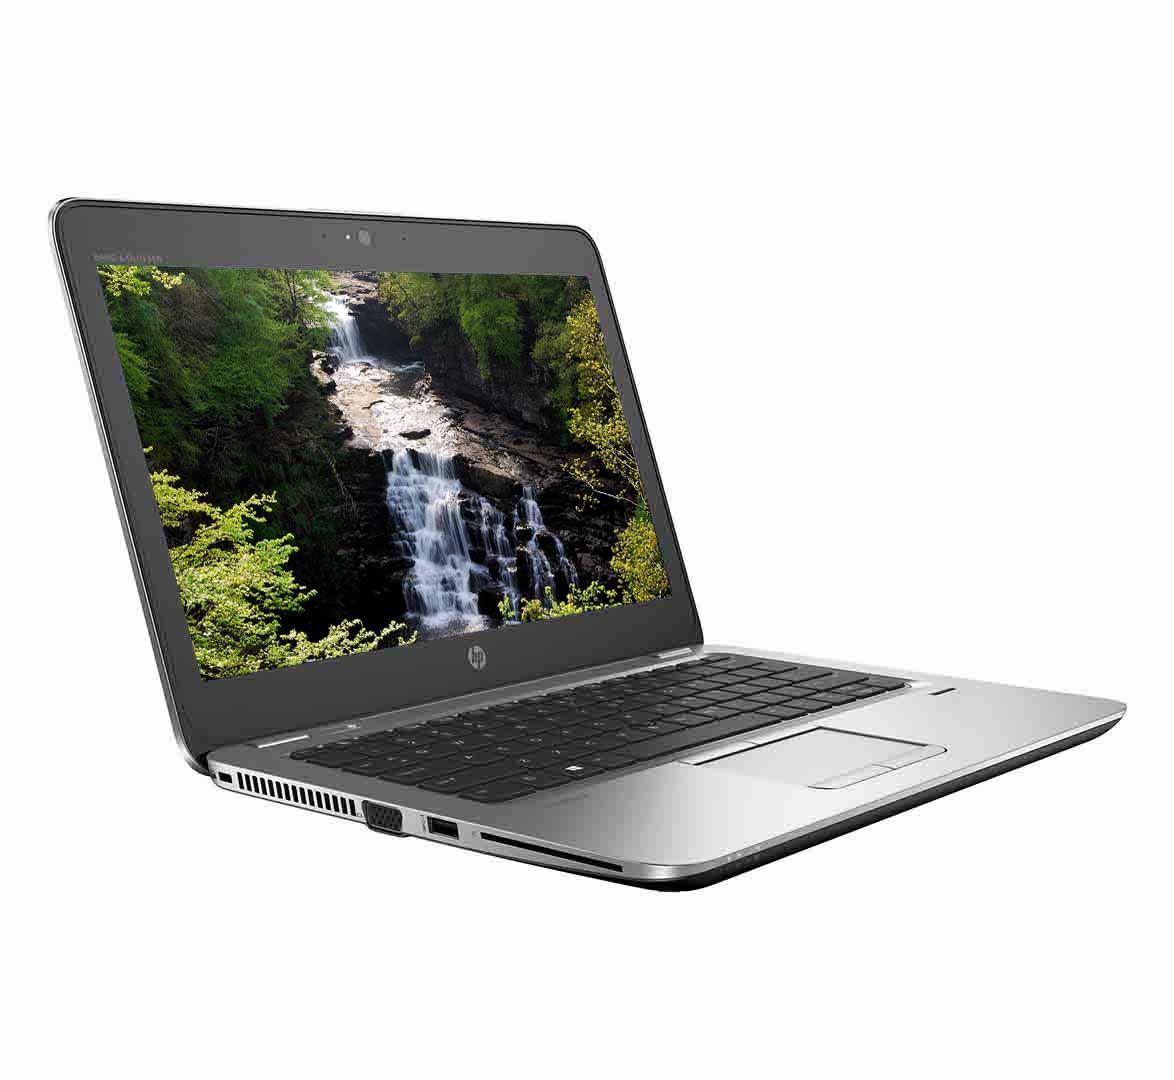 HP EliteBook 725 G4 Business Laptop, AMD A12 Series CPU, 8GB RAM, 500GB HDD, AMD Radeon R7, 12.5 inch Display, Windows 10 Pro, Refurbished Laptop